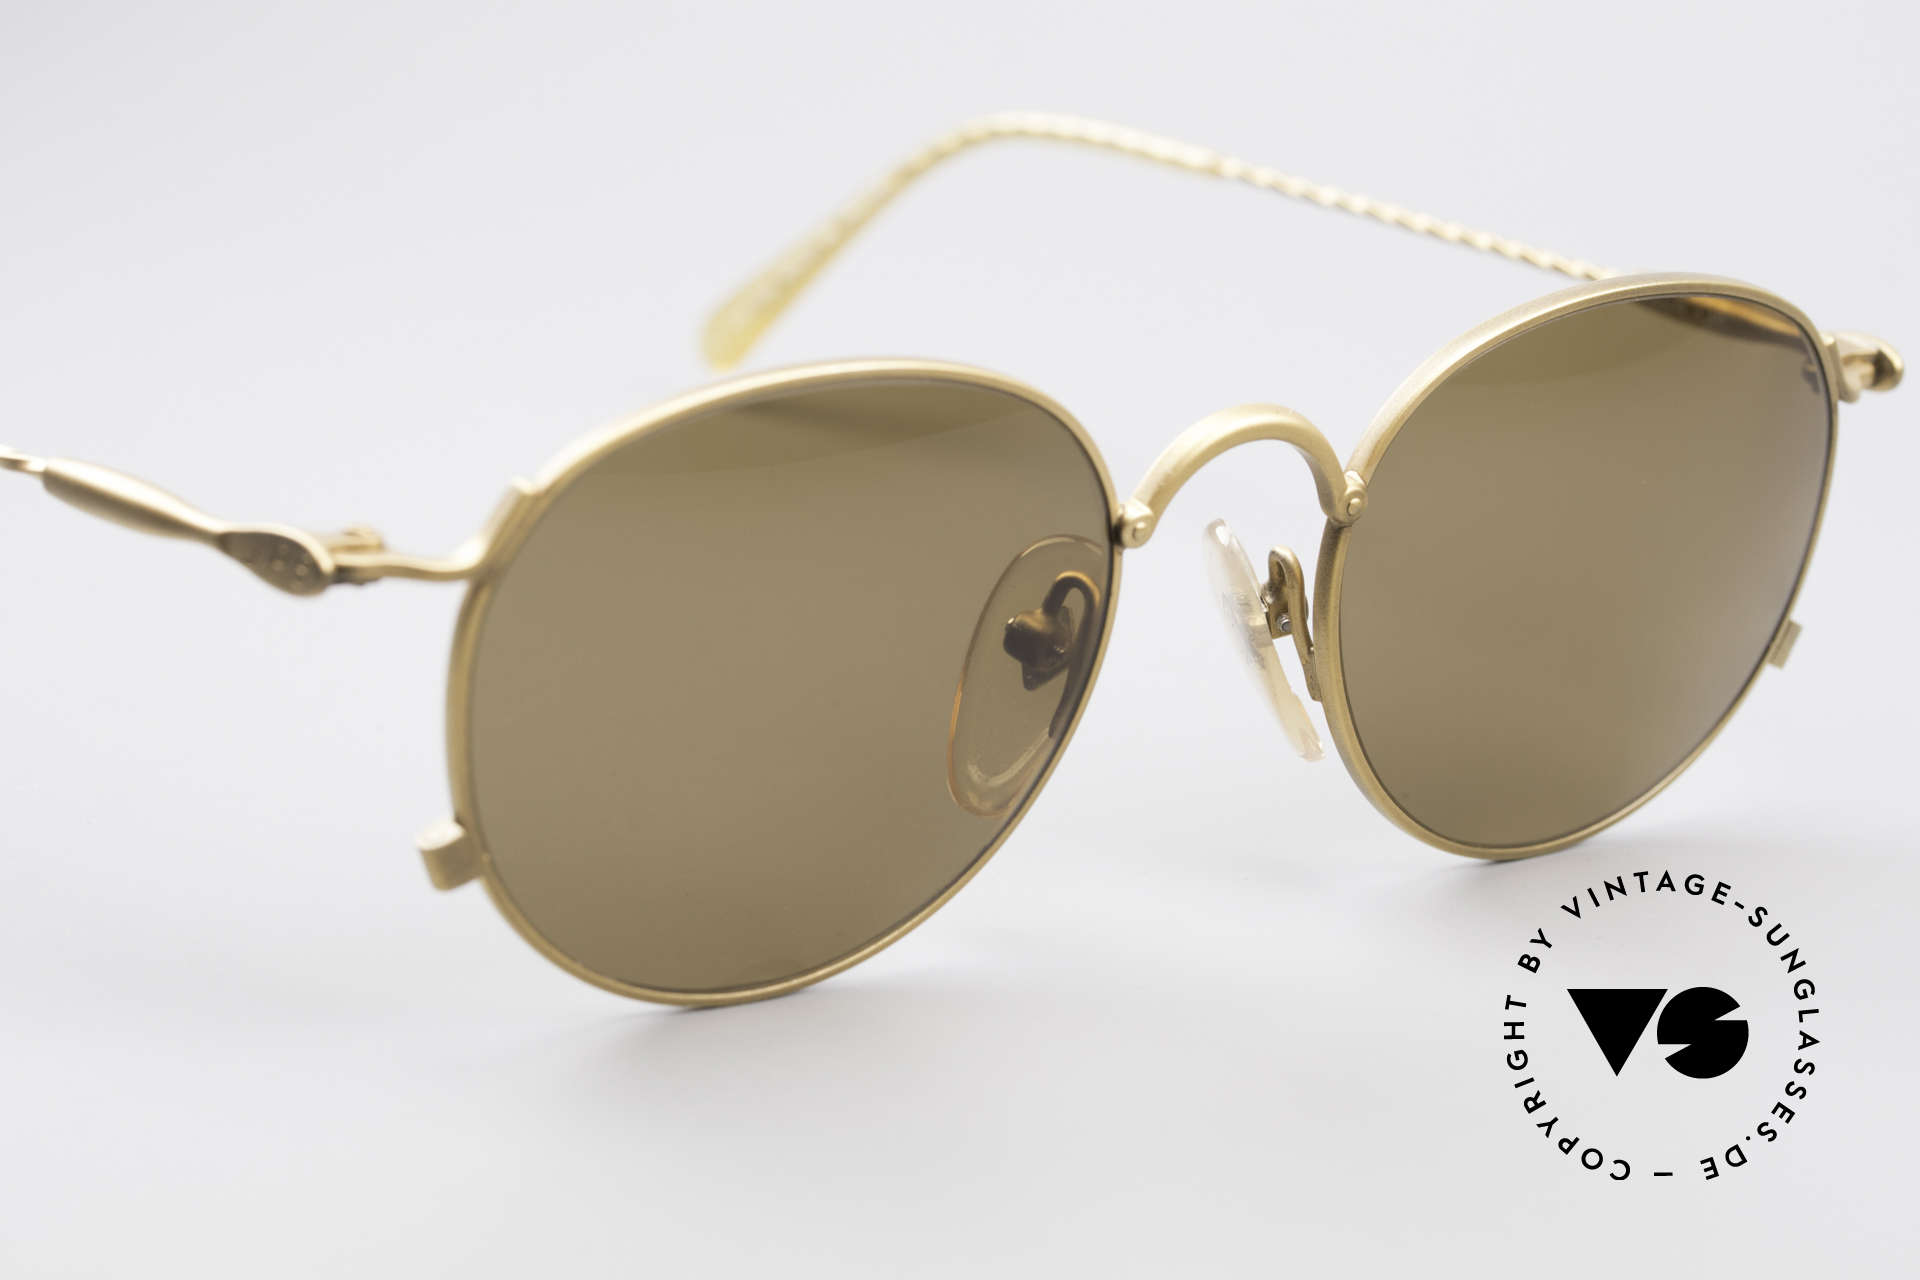 Sunglasses Jean Paul Gaultier 55-2172 Vintage Round JPG Sunglasses